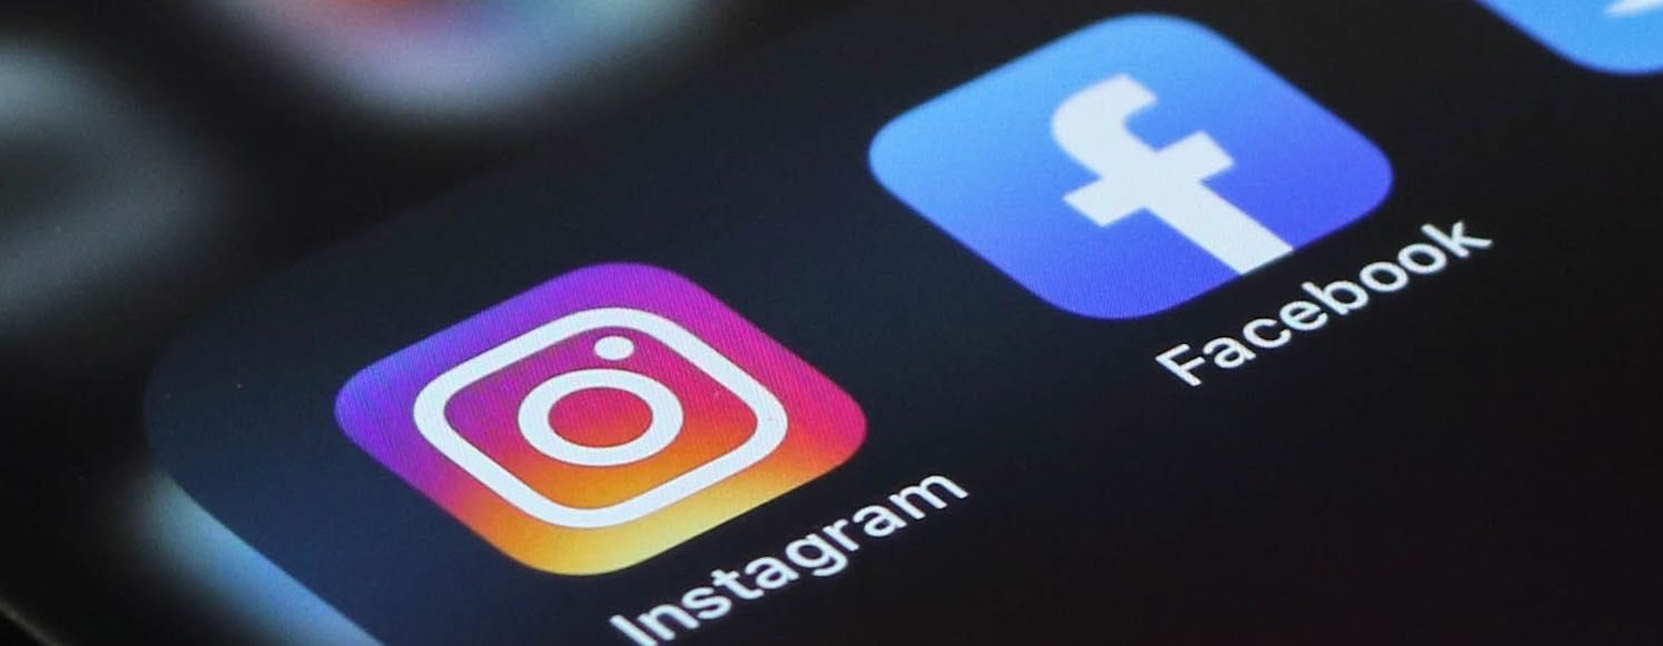 Facebook e Instagram: gestire i social per media e aziende